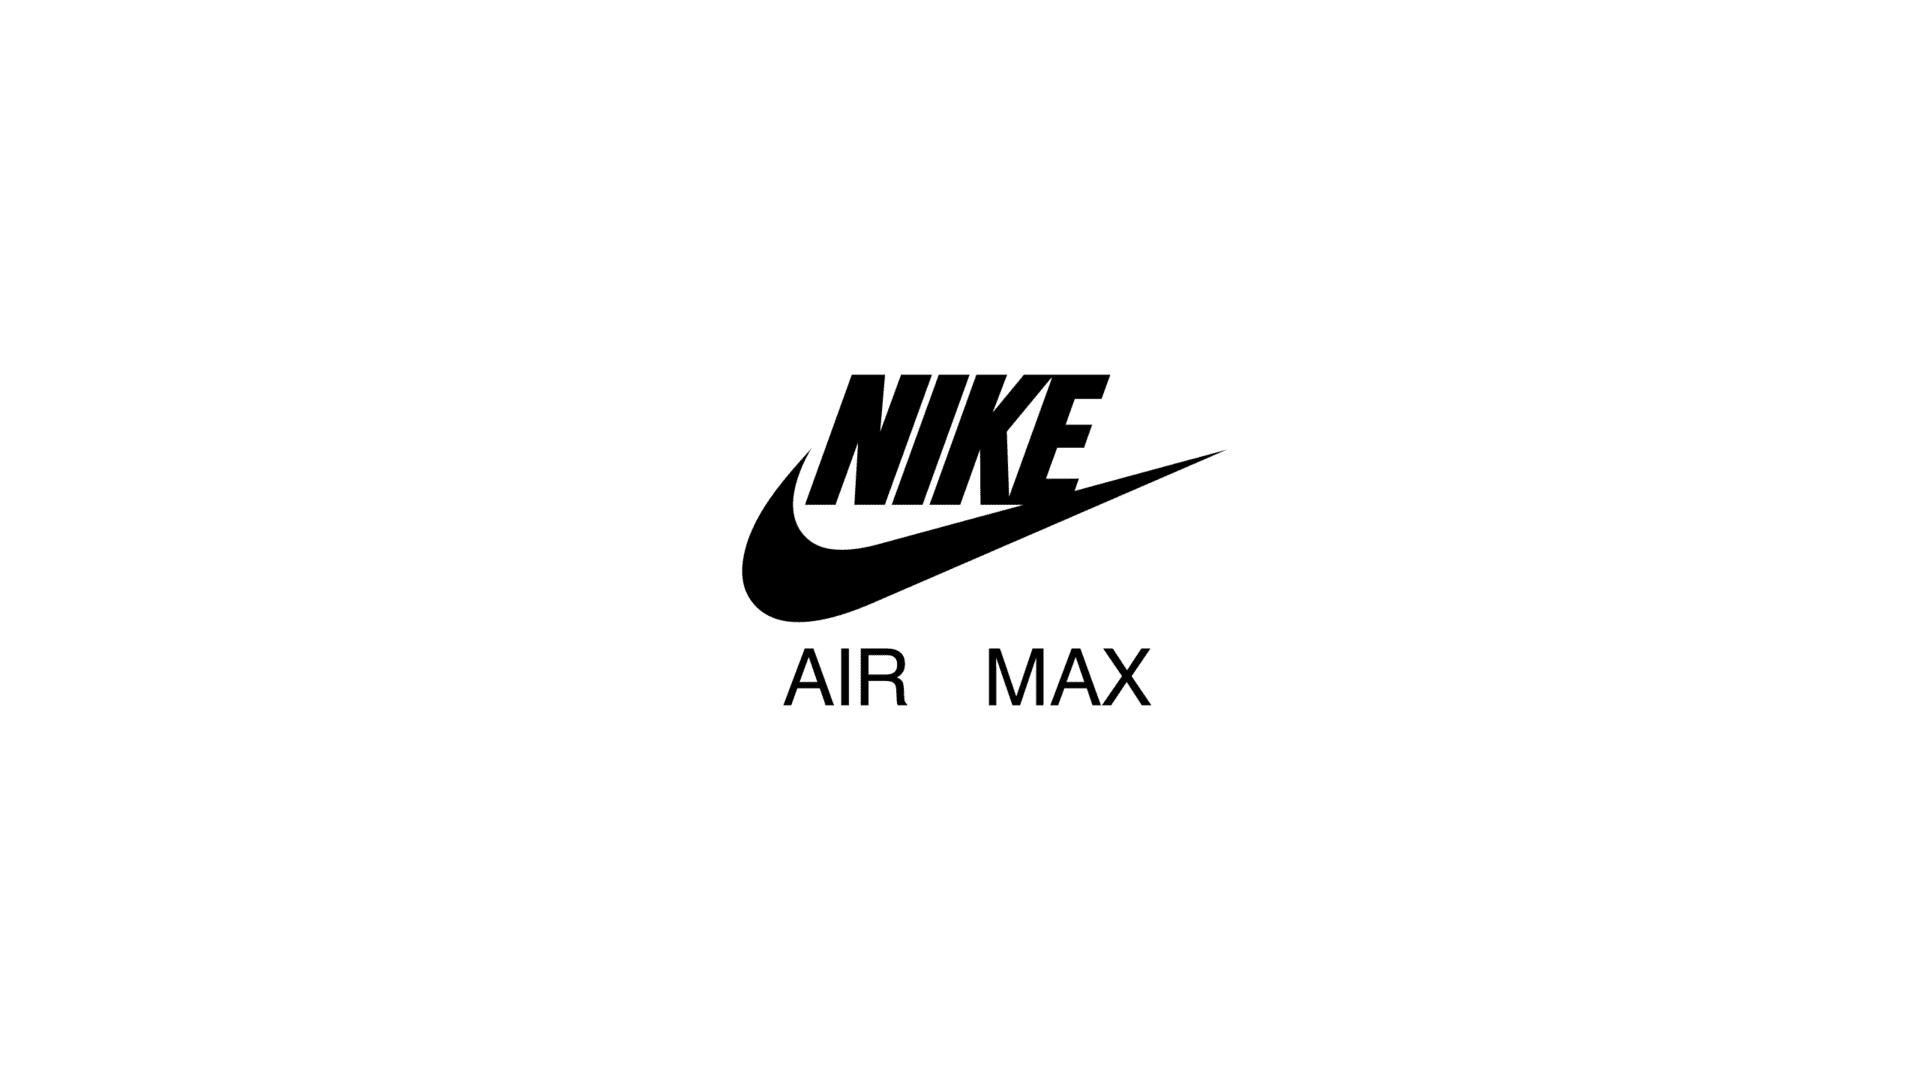 Lesionarse Cambiarse de ropa Ligeramente Air Max. Air Max Day. Nike ES